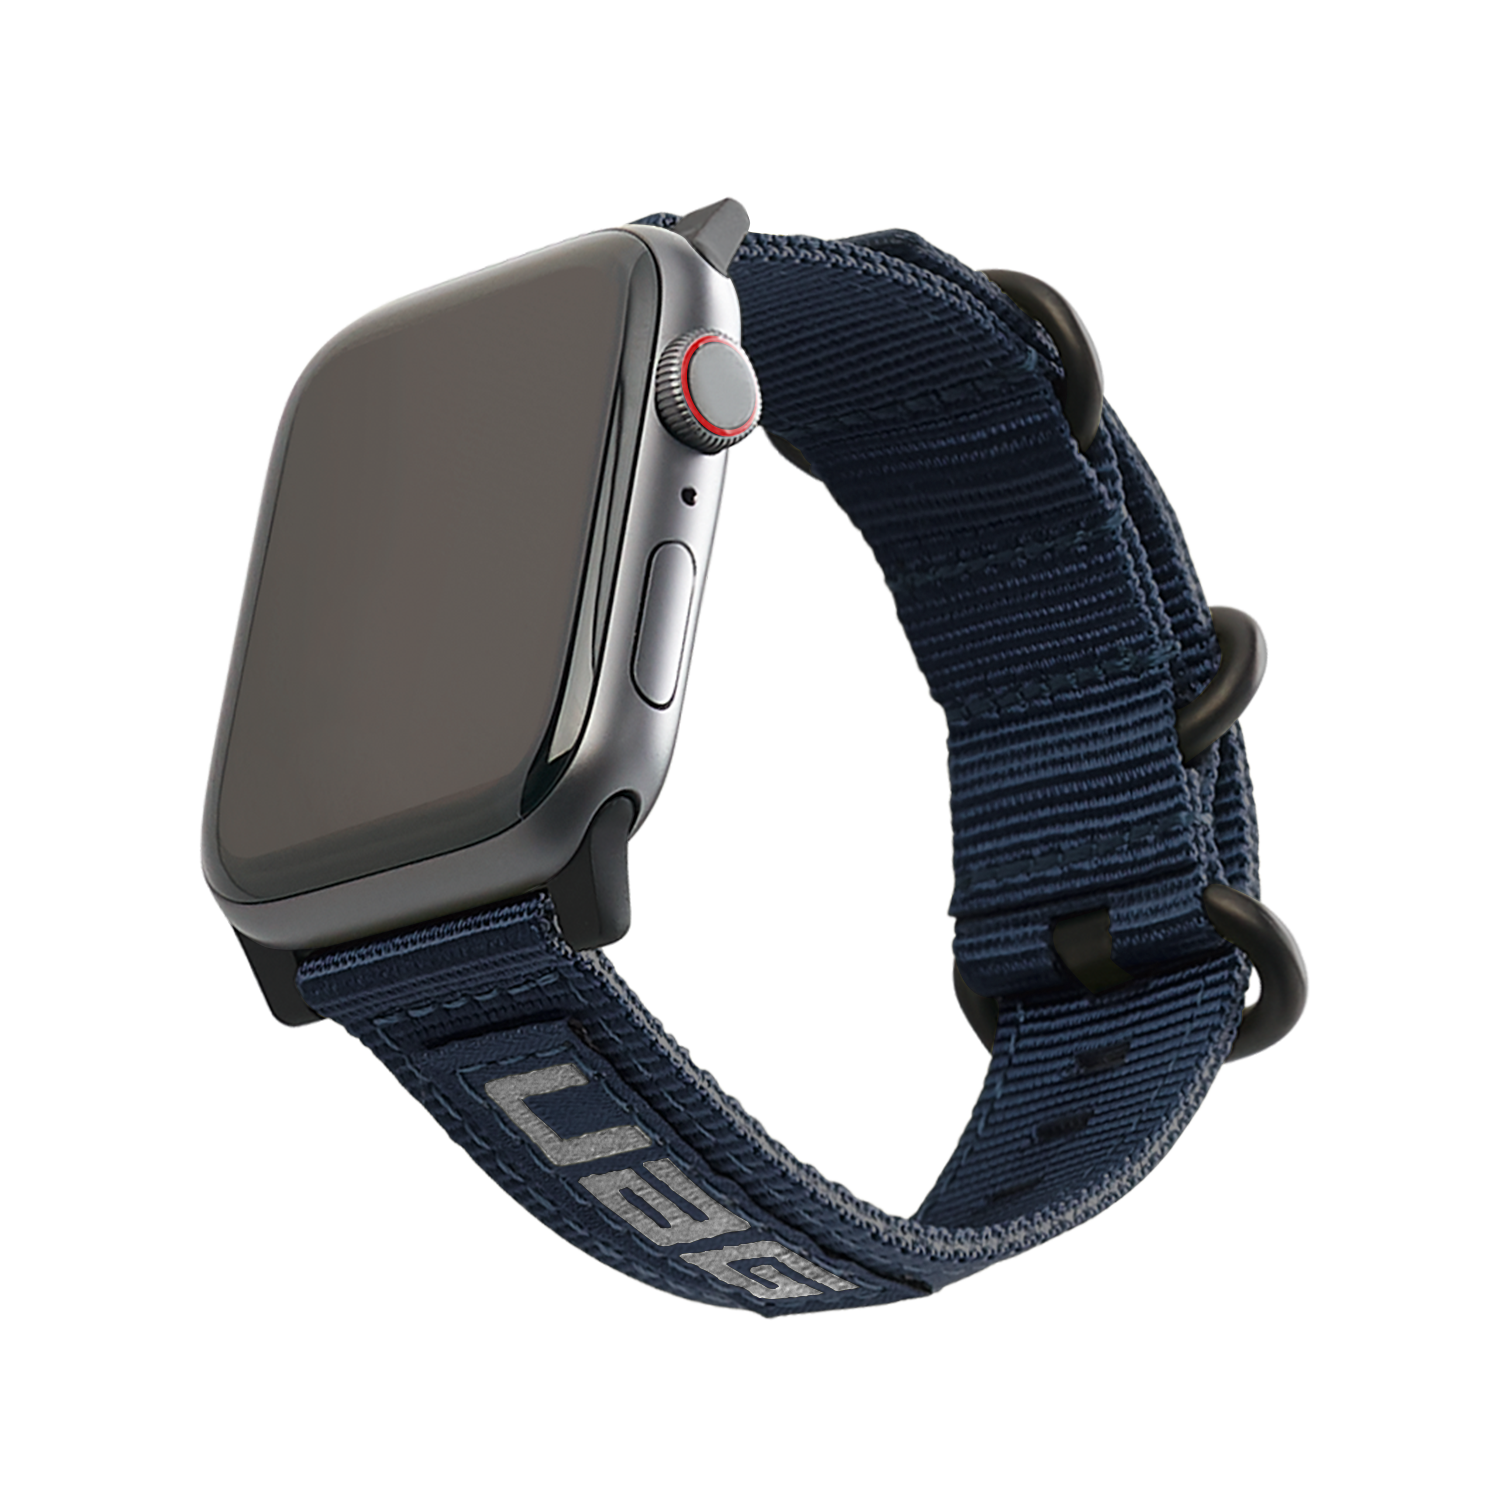 Nato Eco Strap Apple Watch 45mm Series 7 Mallard